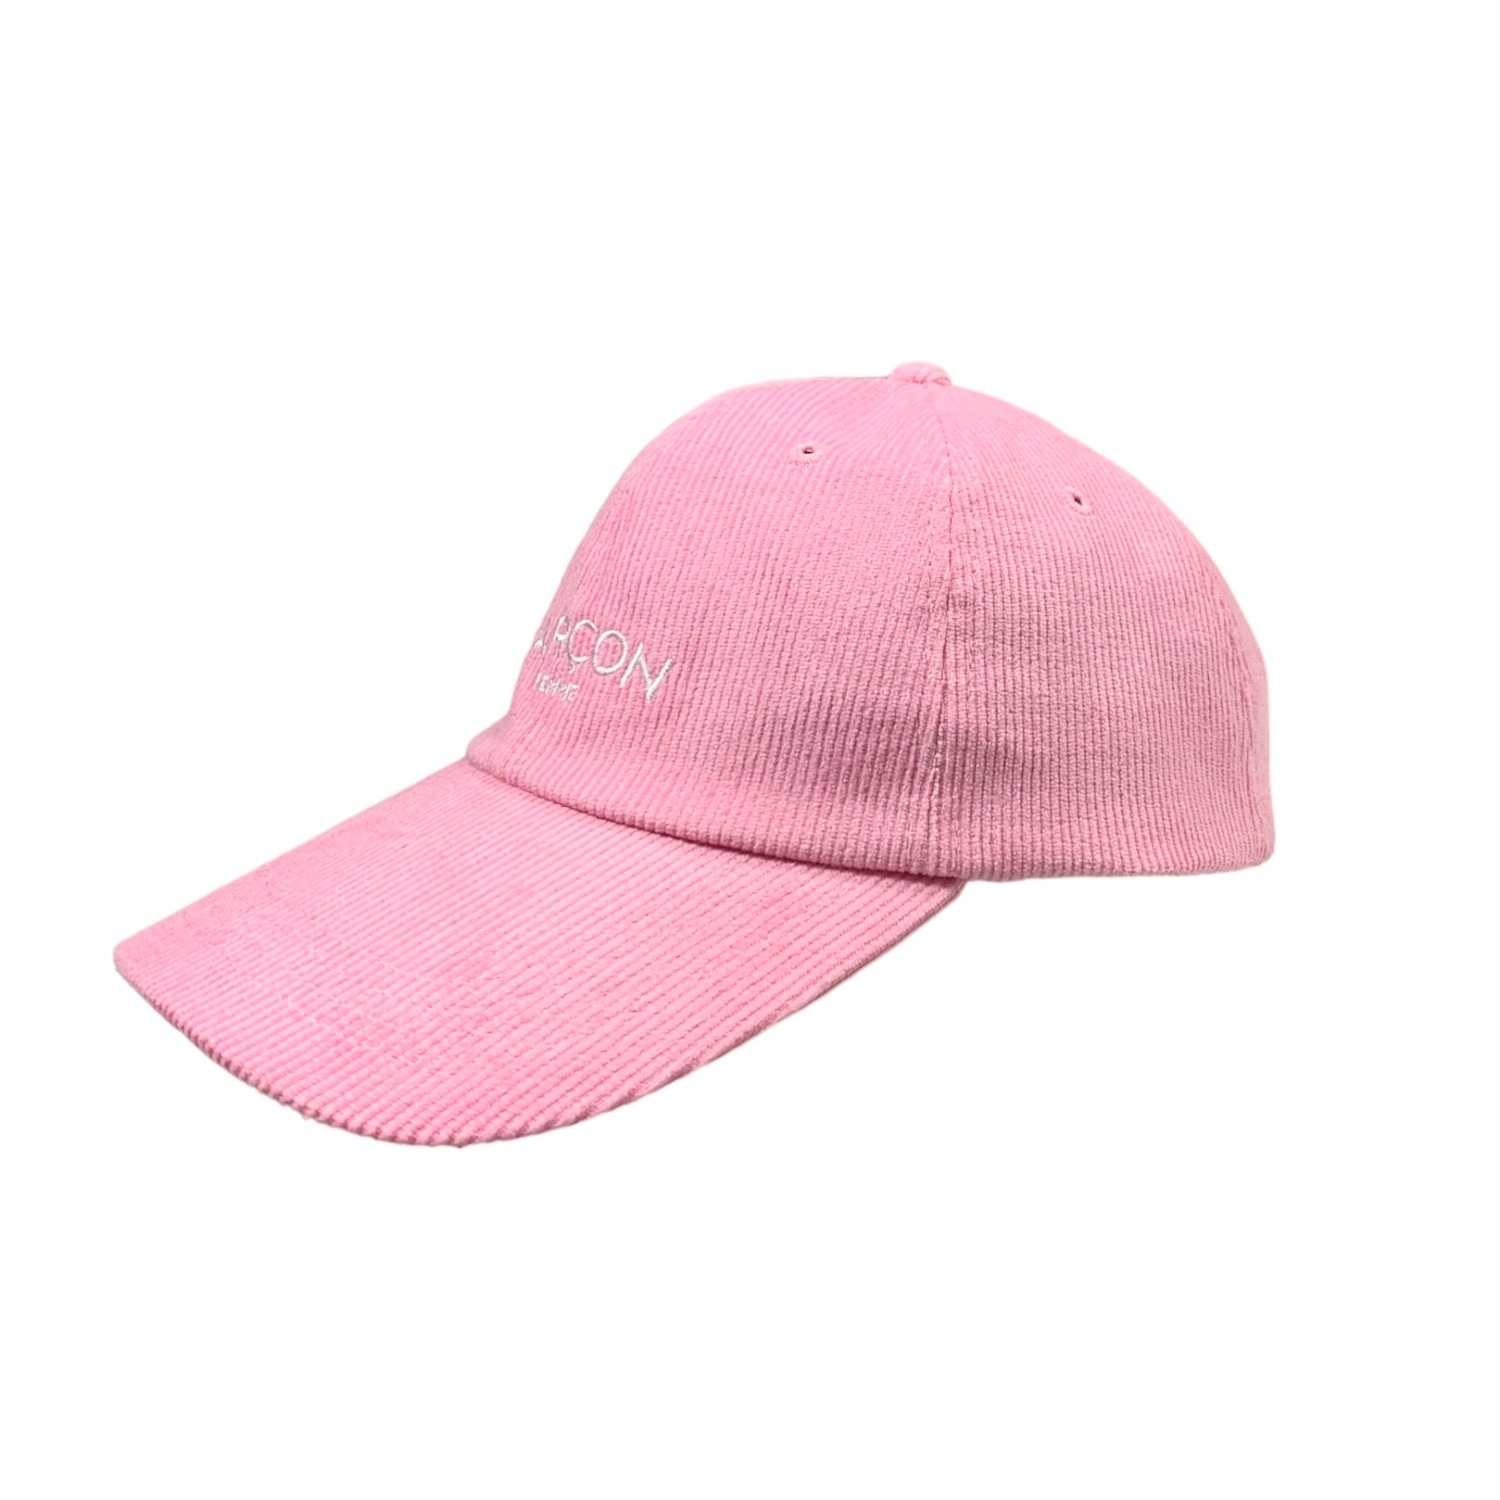 Garcon Cap - Femme (Flamingo Pink)